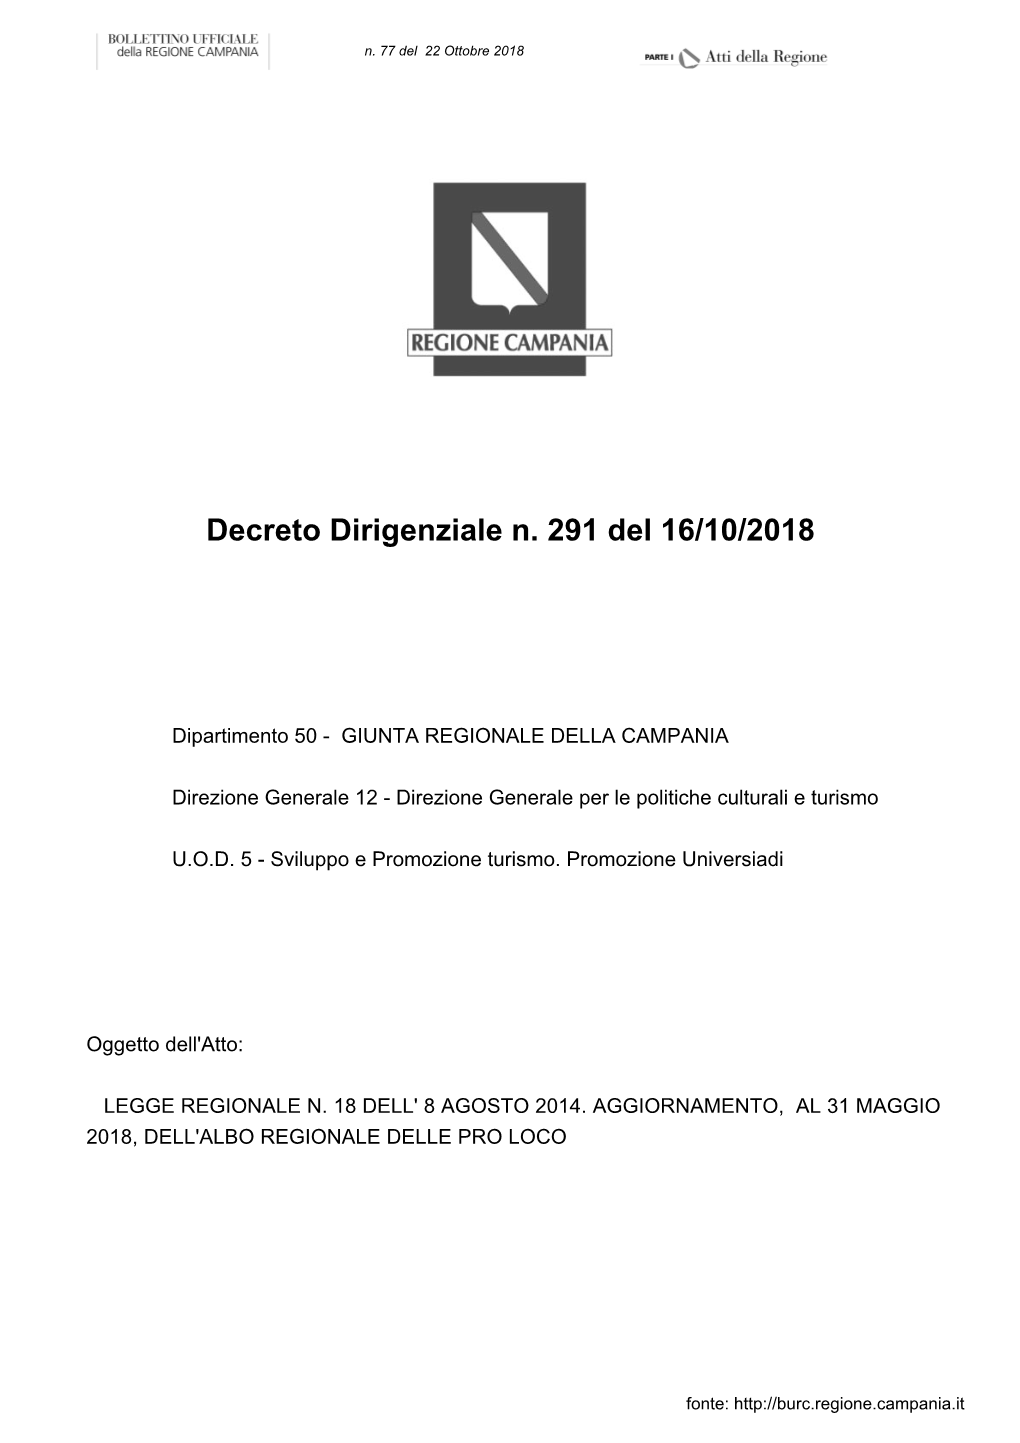 Decreto Dirigenziale N. 291 Del 16/10/2018